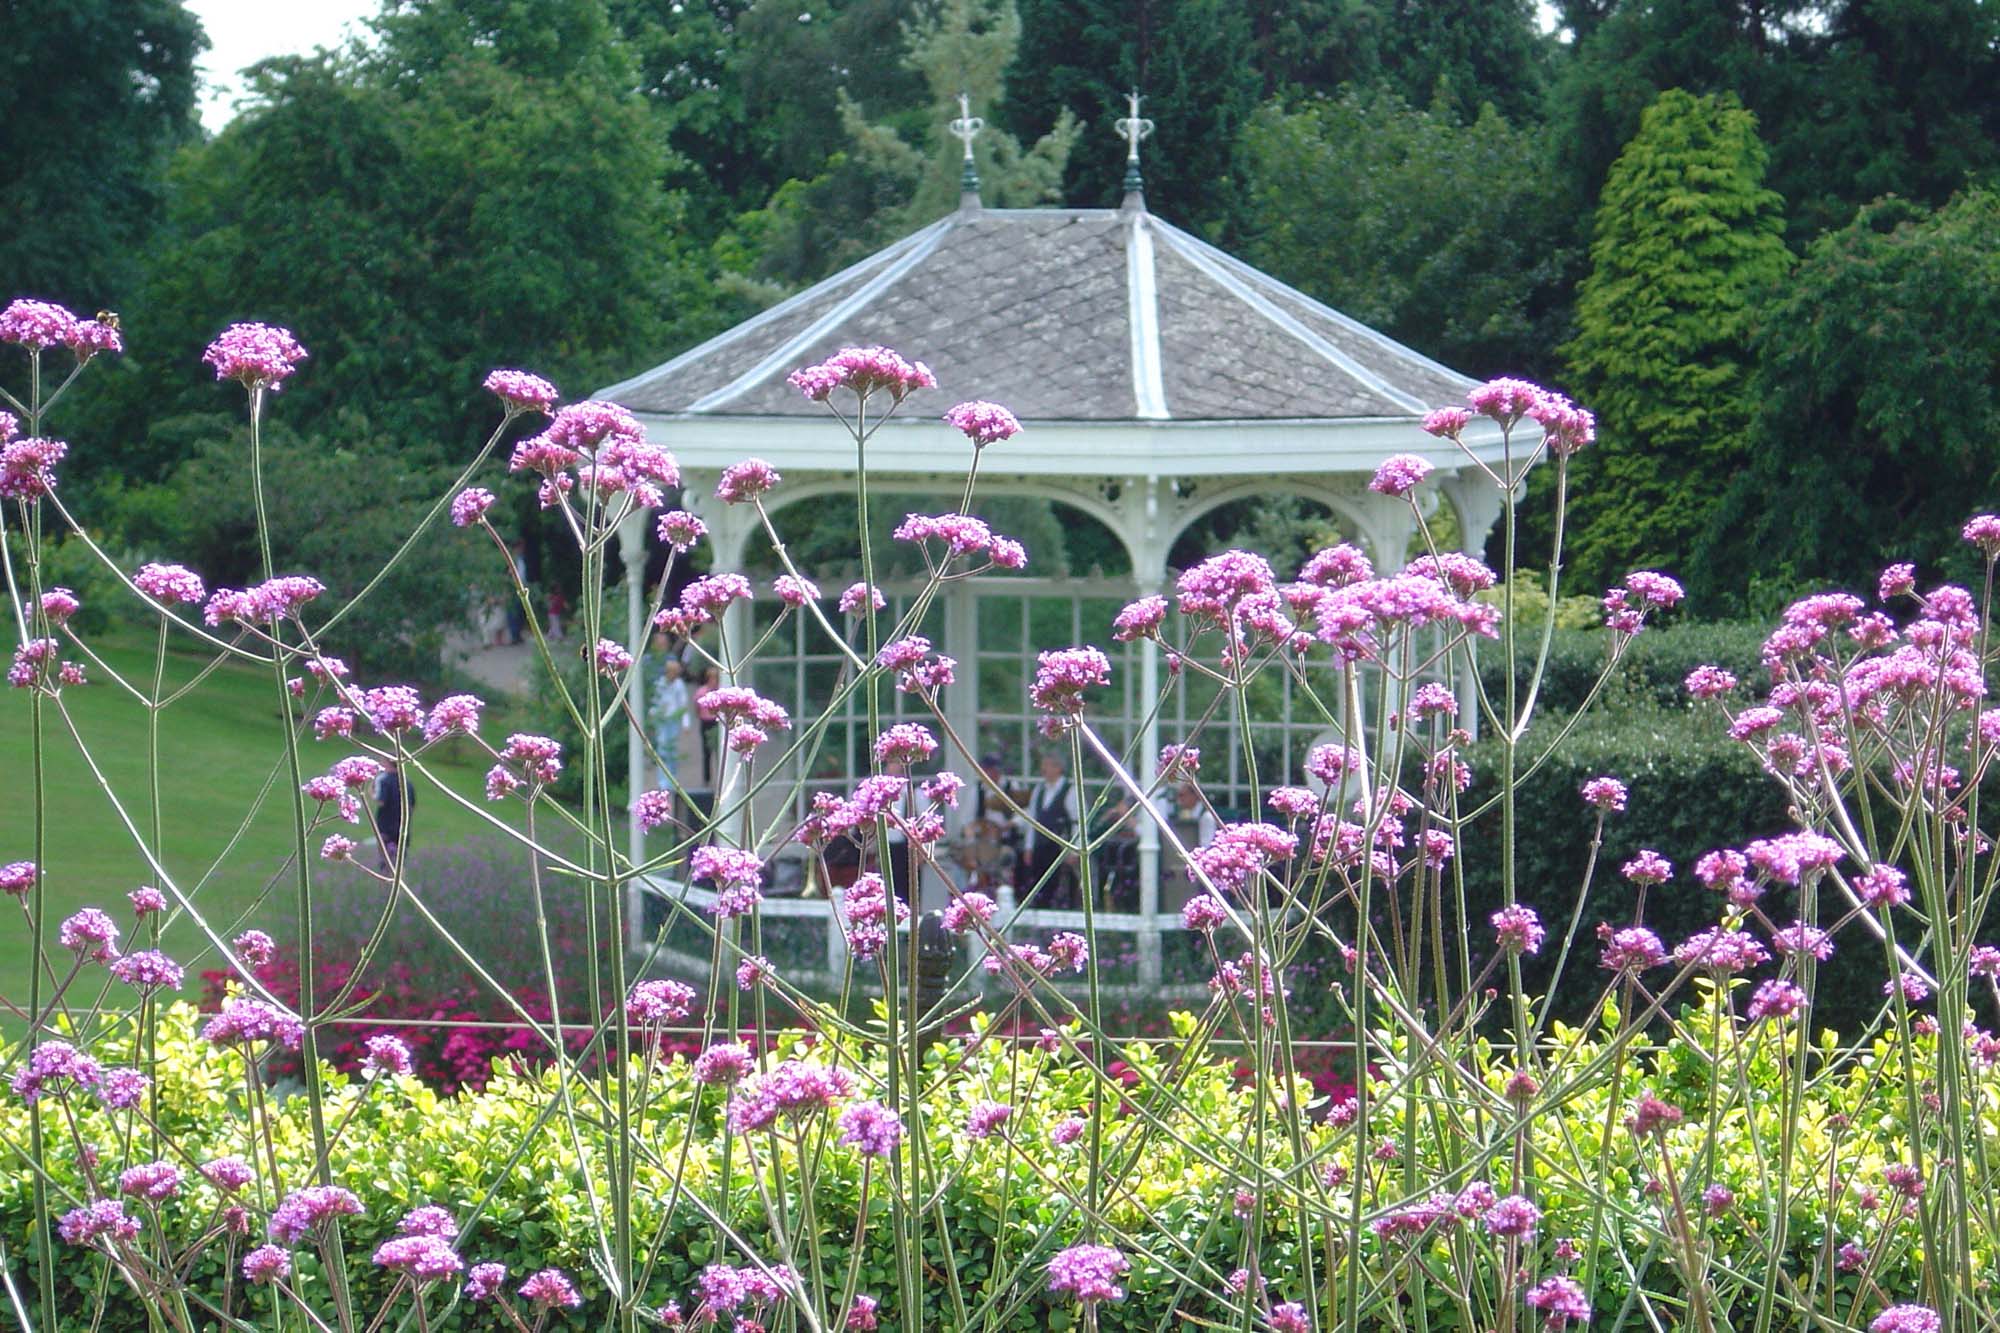 Birmingham Botanical Gardens announces re-opening